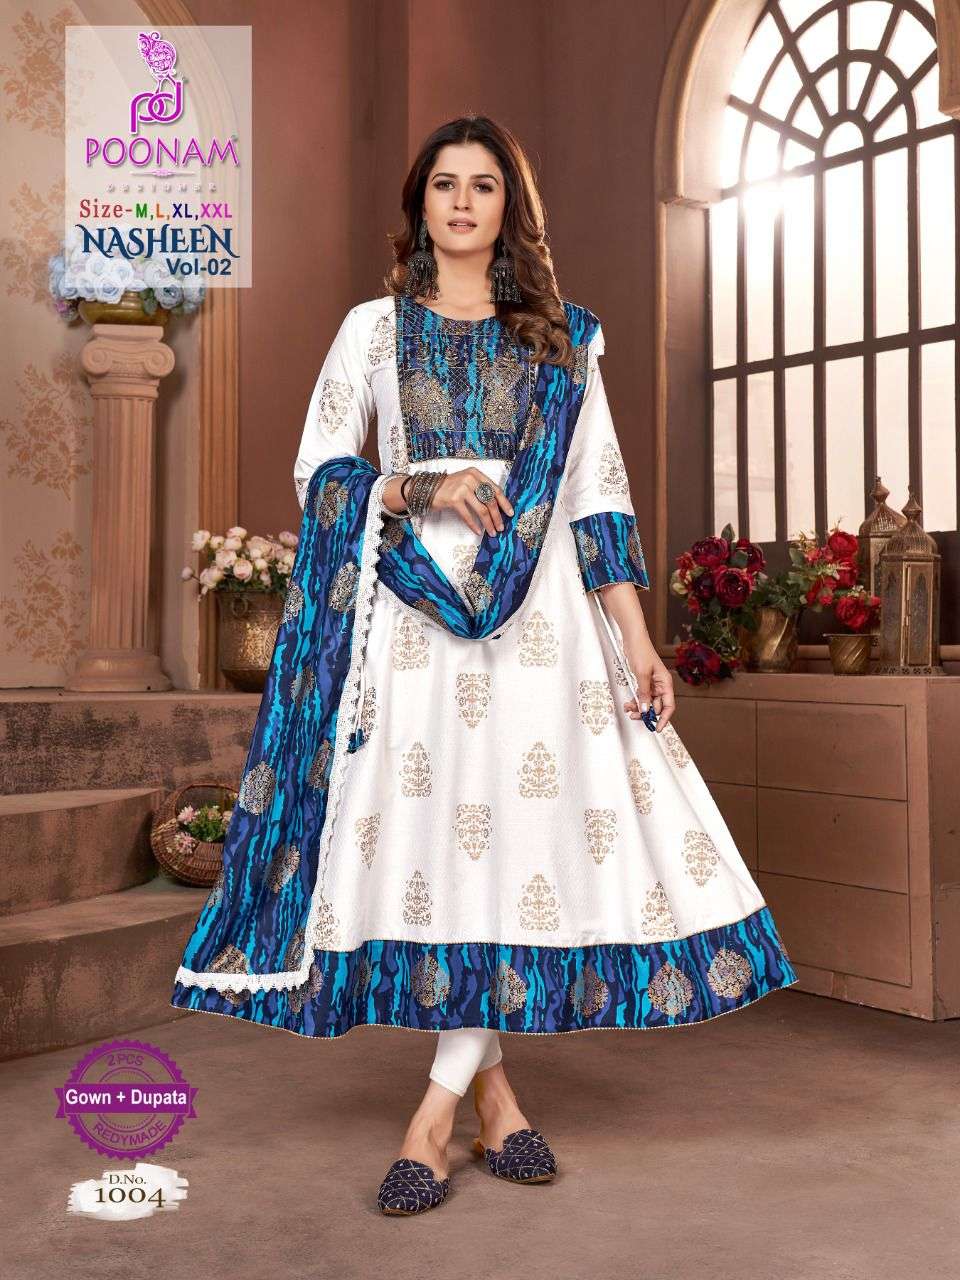 Poonam Designer Nasheen Vol 2 New Designs Gown Dupatta Set Wholesaler